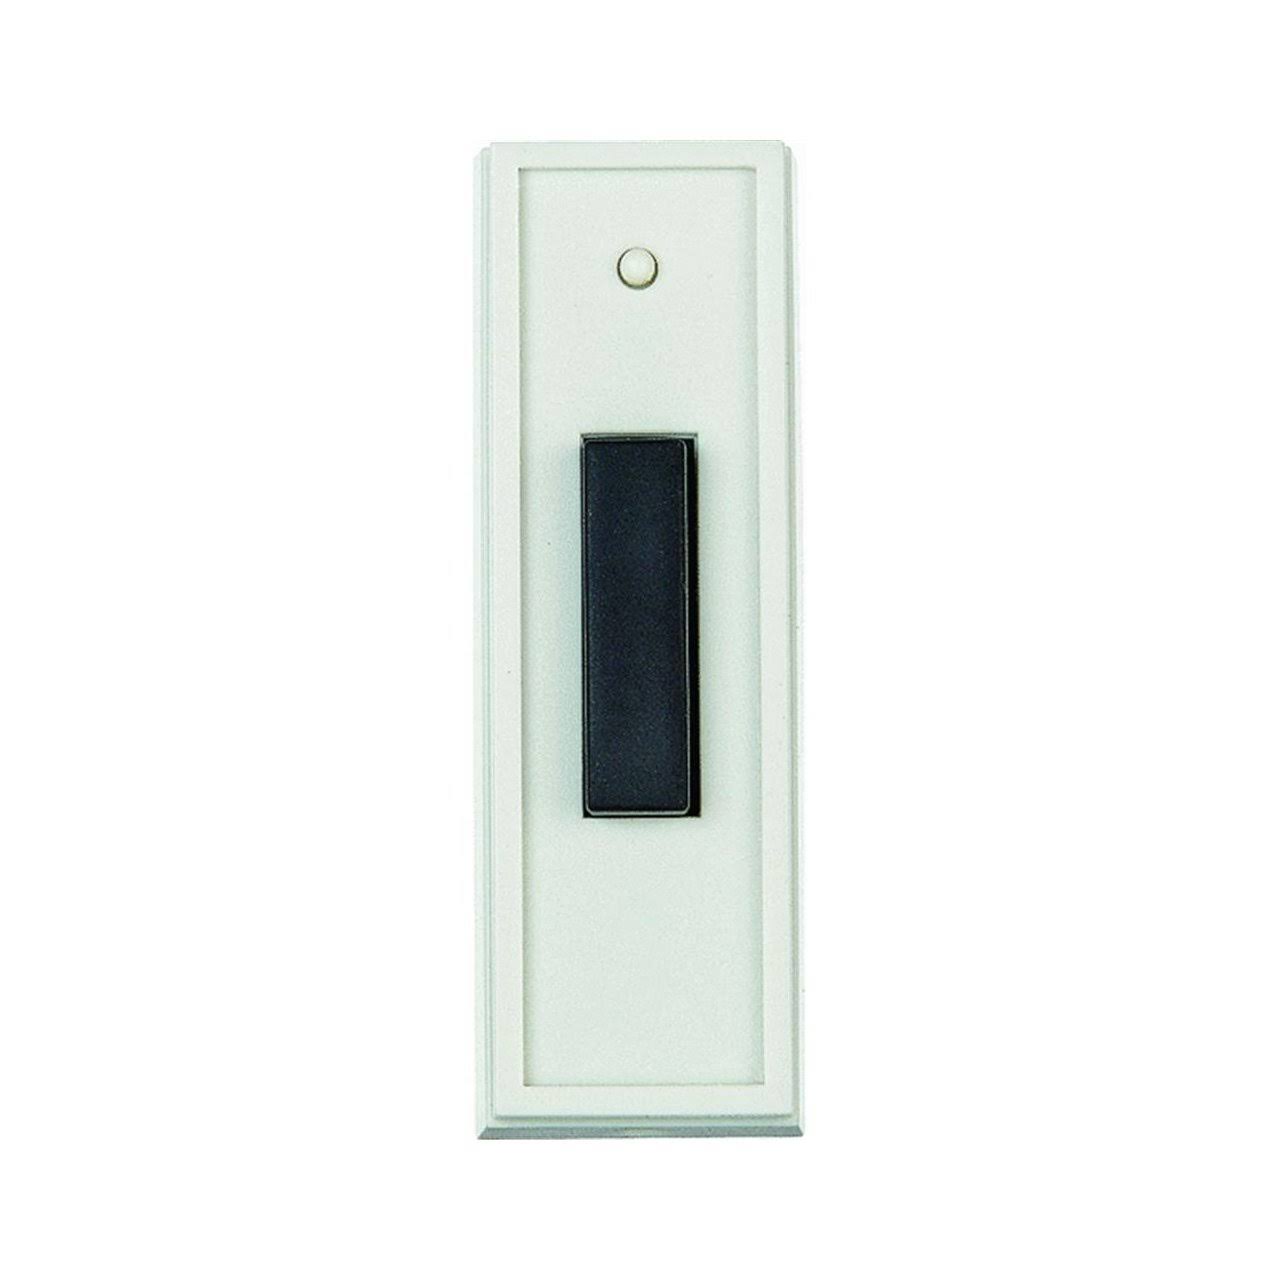 Wireless Door Chime Push Button